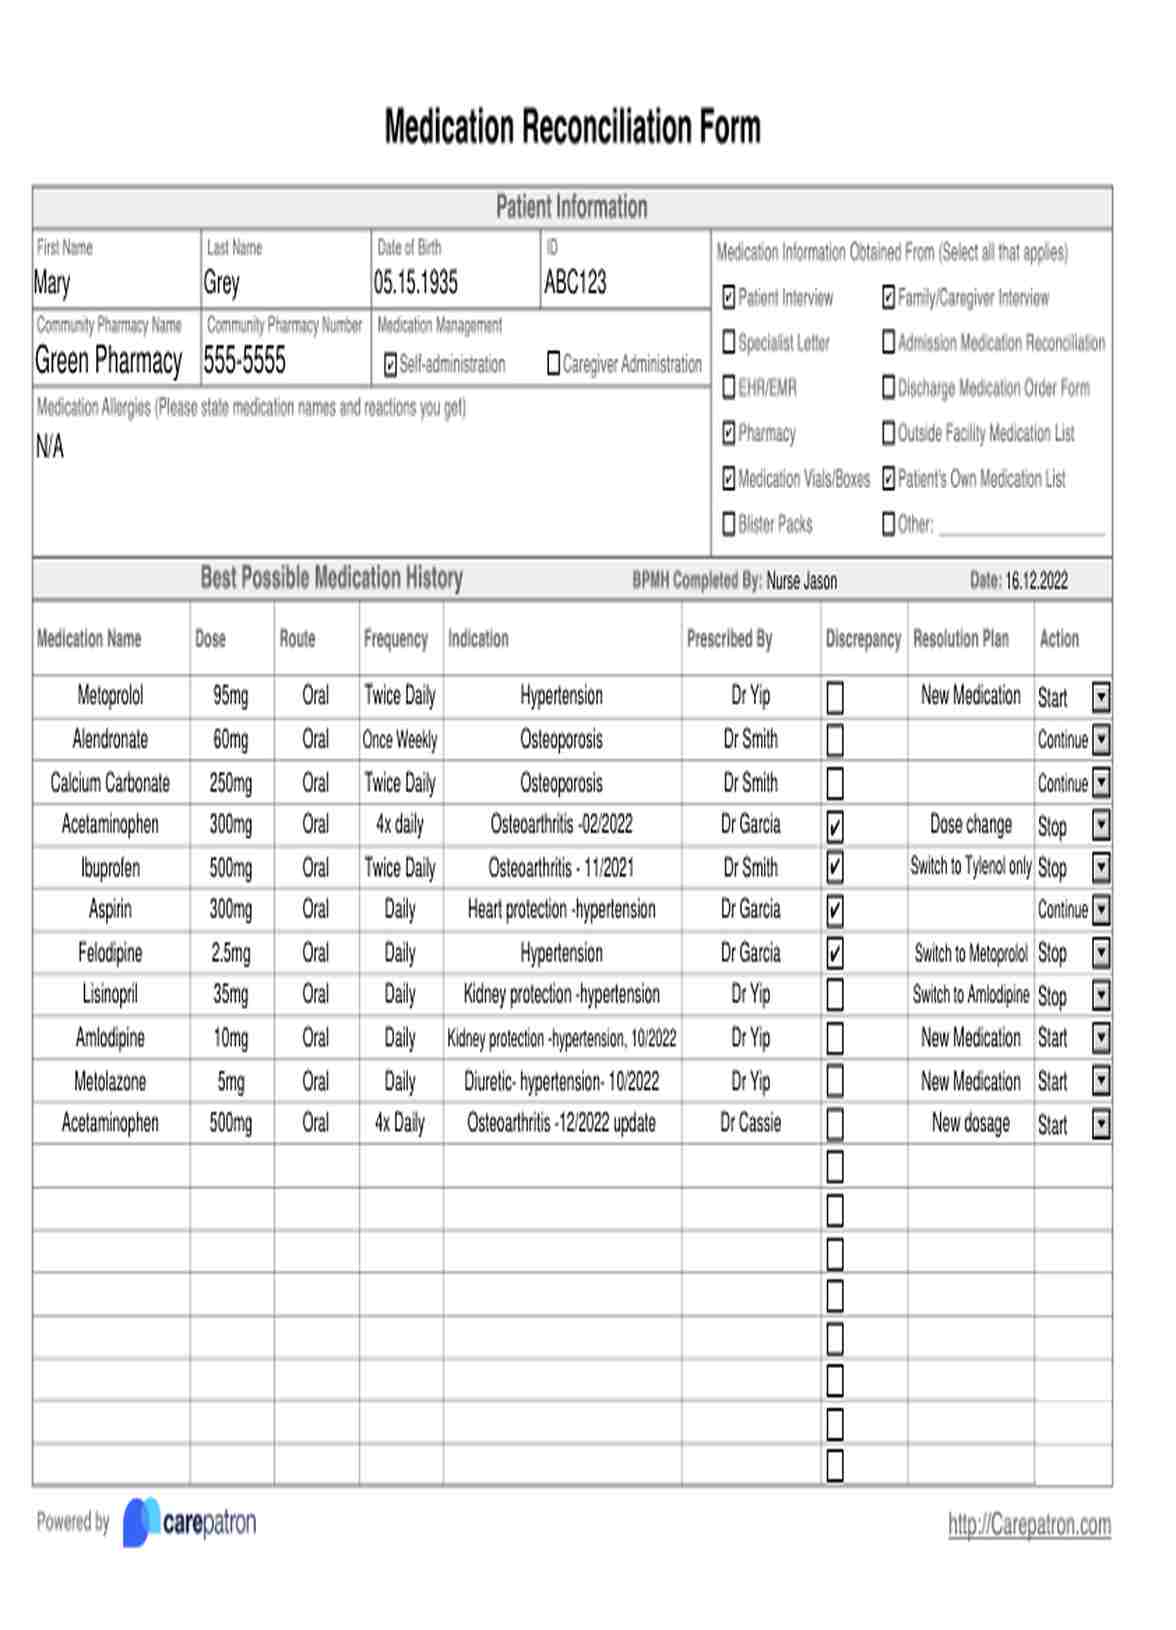 Medication Reconciliation Form PDF Example